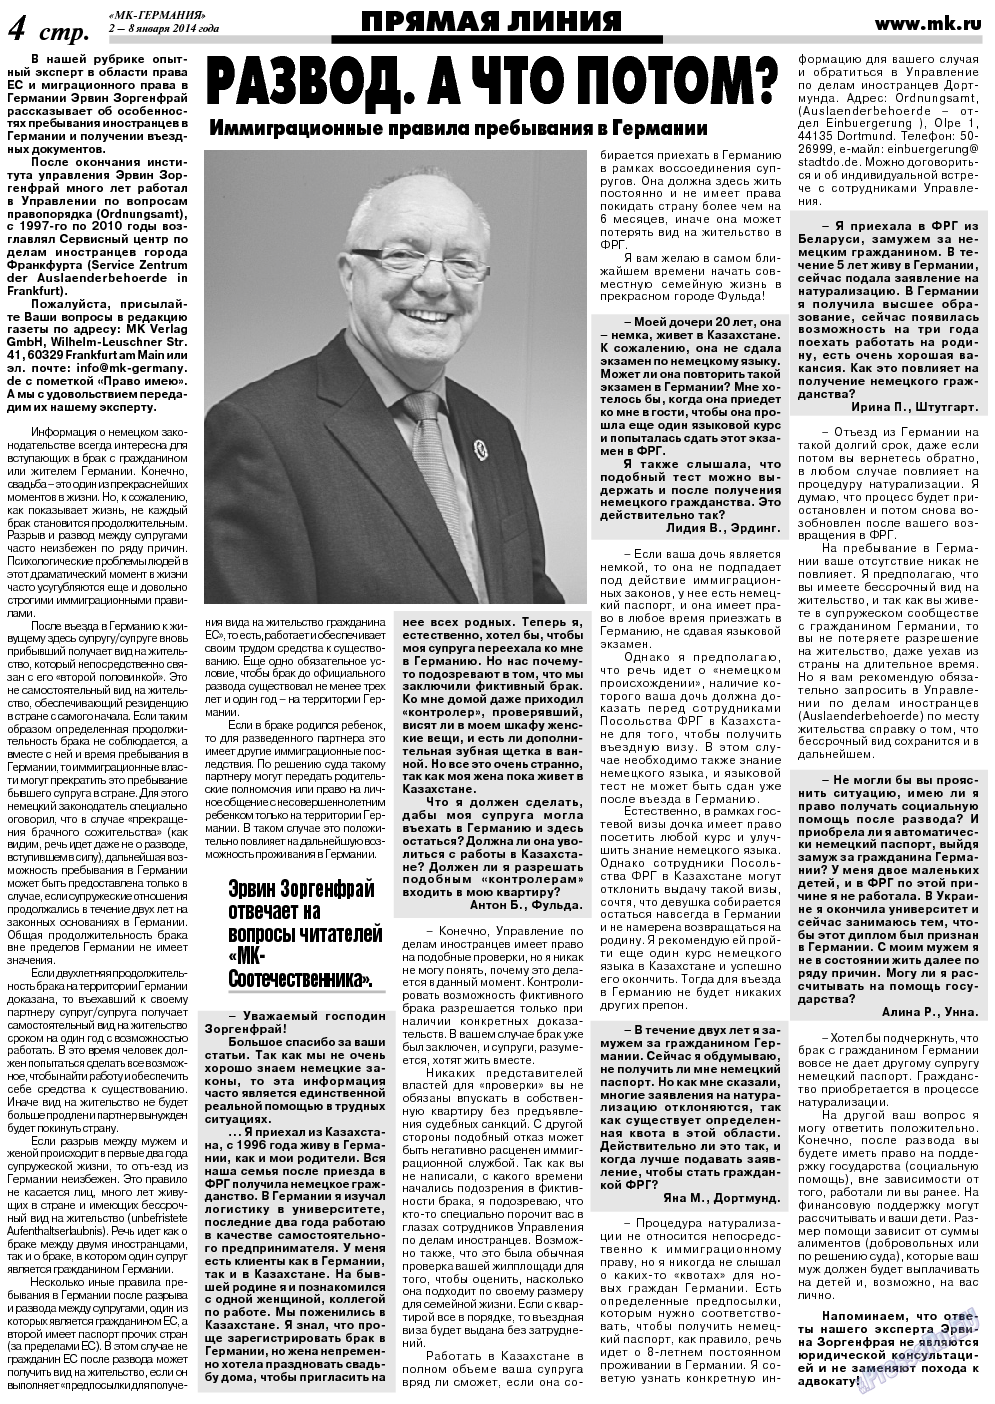 МК-Германия, газета. 2014 №1 стр.4